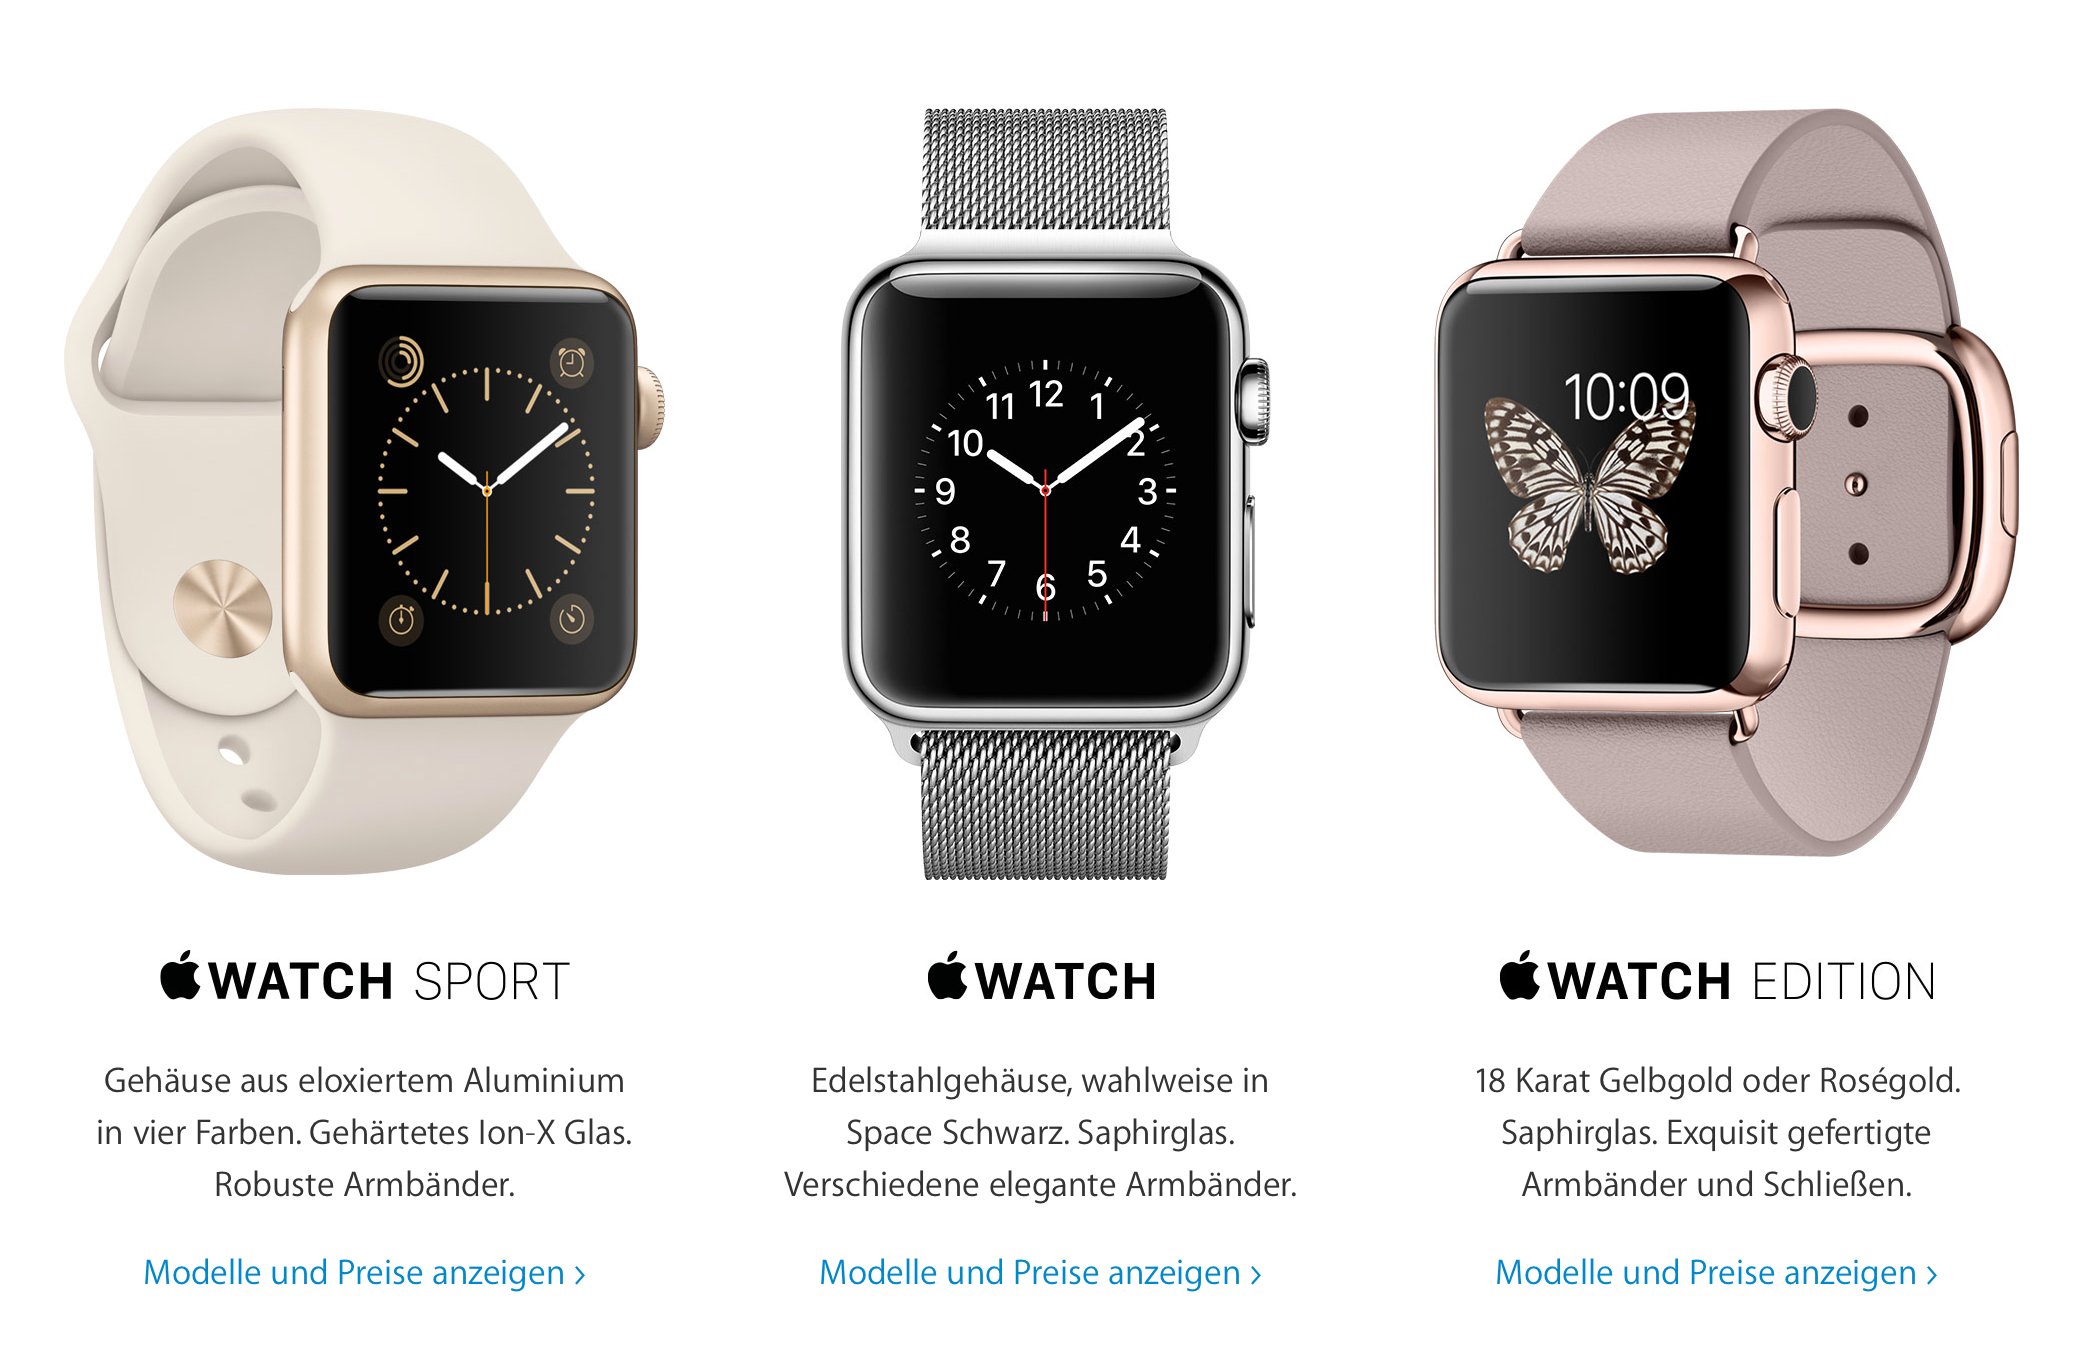 Характеристики часов apple. Часы эпл 6 цвета. Эппл вотч се цвета корпуса. Часы эпл вотч се. Часы эпл вотч цвета.